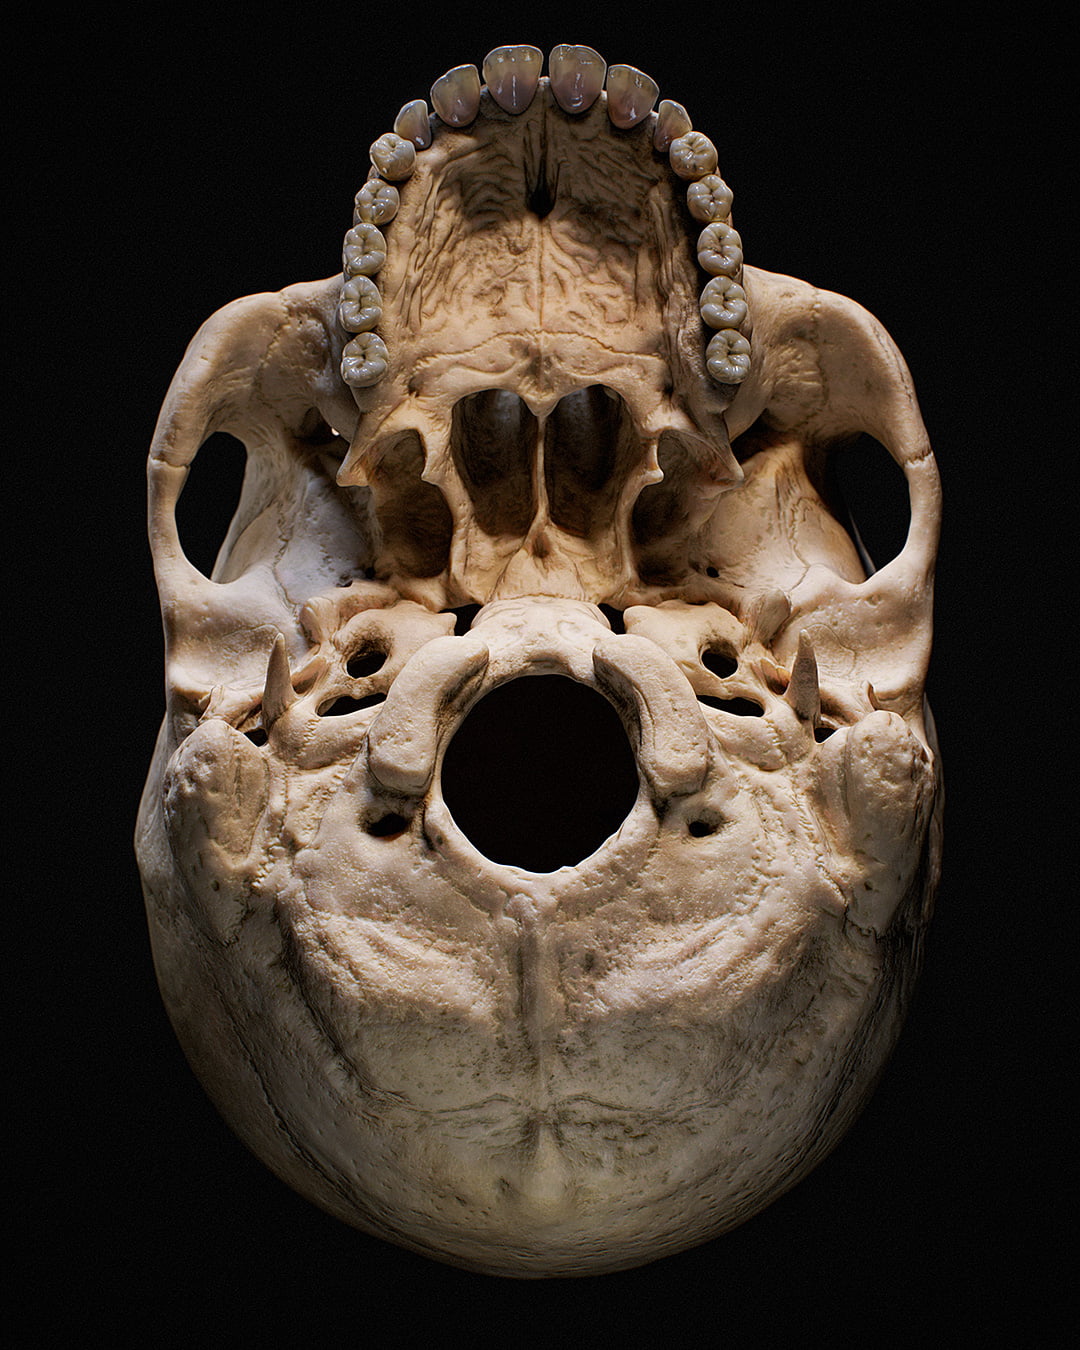 Realistic 3D Human Skull Underside Anatomy PBR Render by Roy Nottage